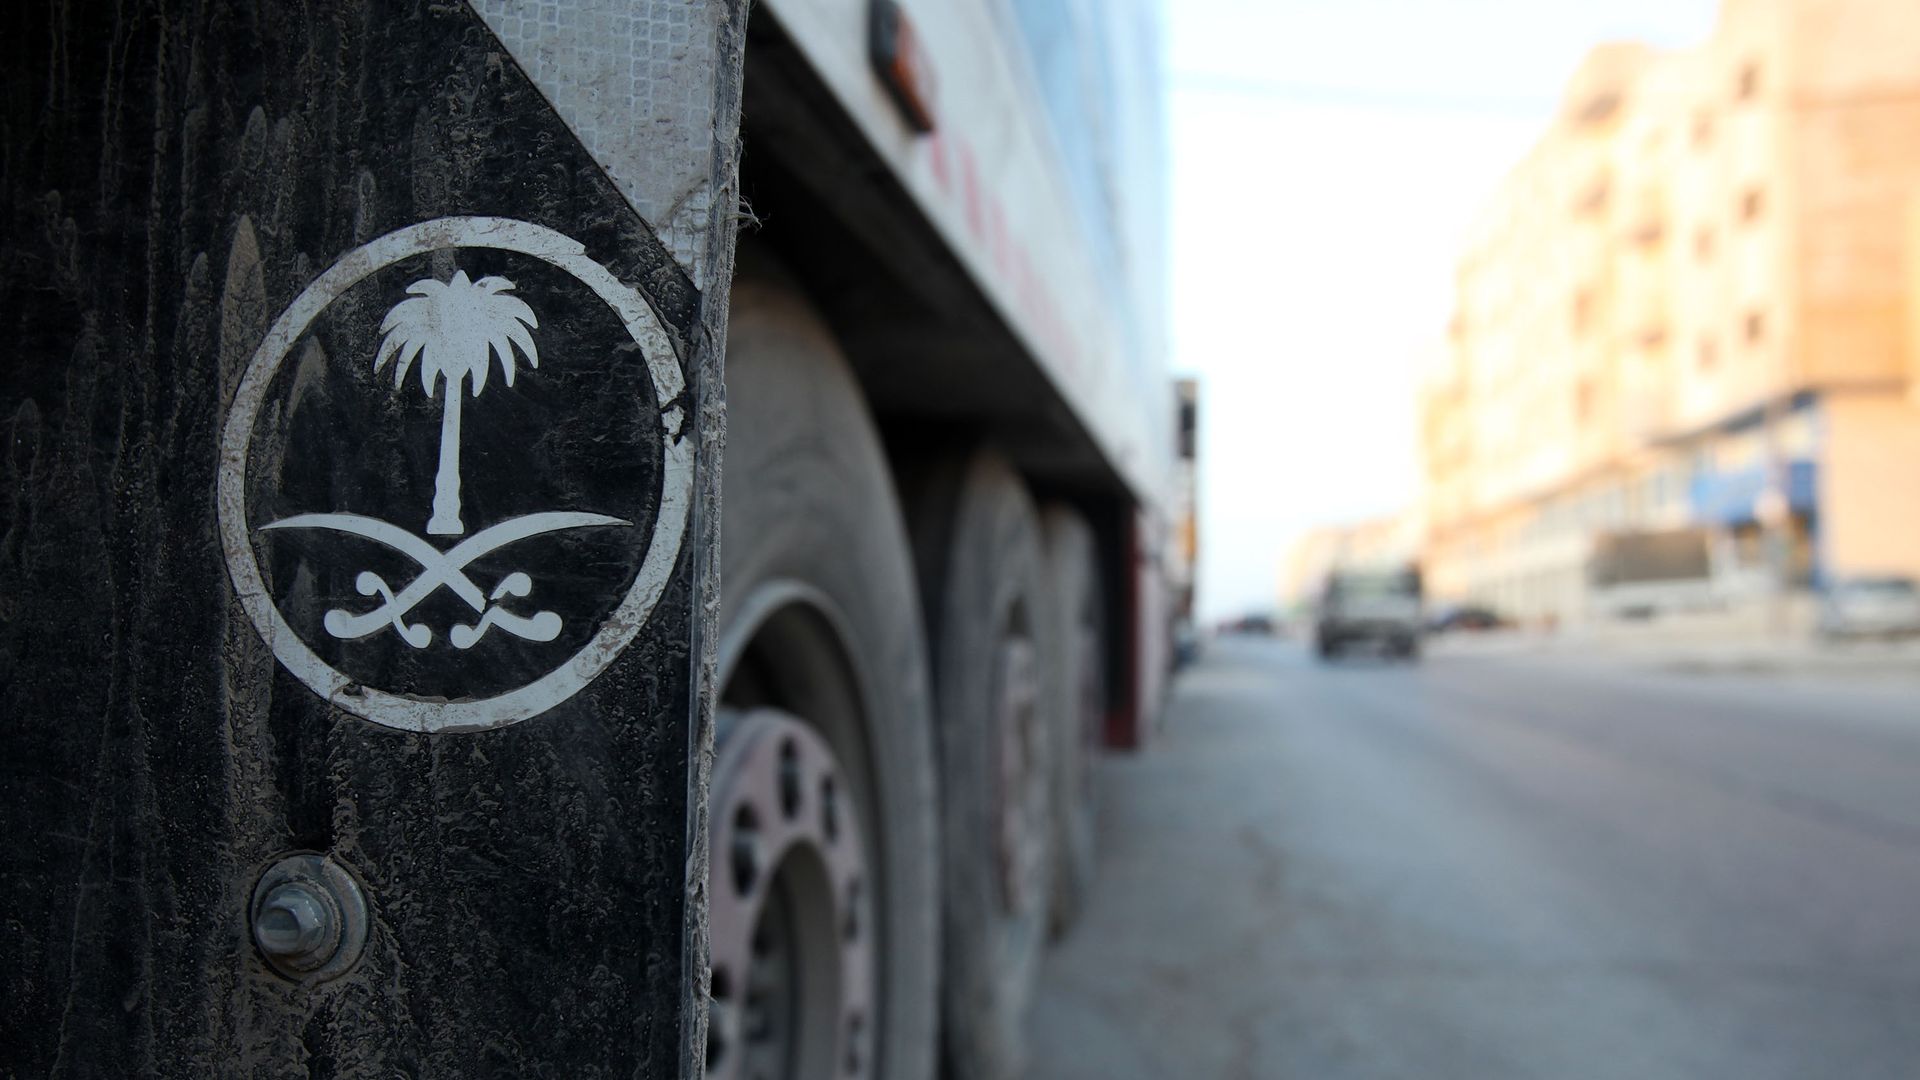 The wheel of a truck in Jordan in February 2017. Photo: Salah Malkawi/Anadolu Agency/Getty Images